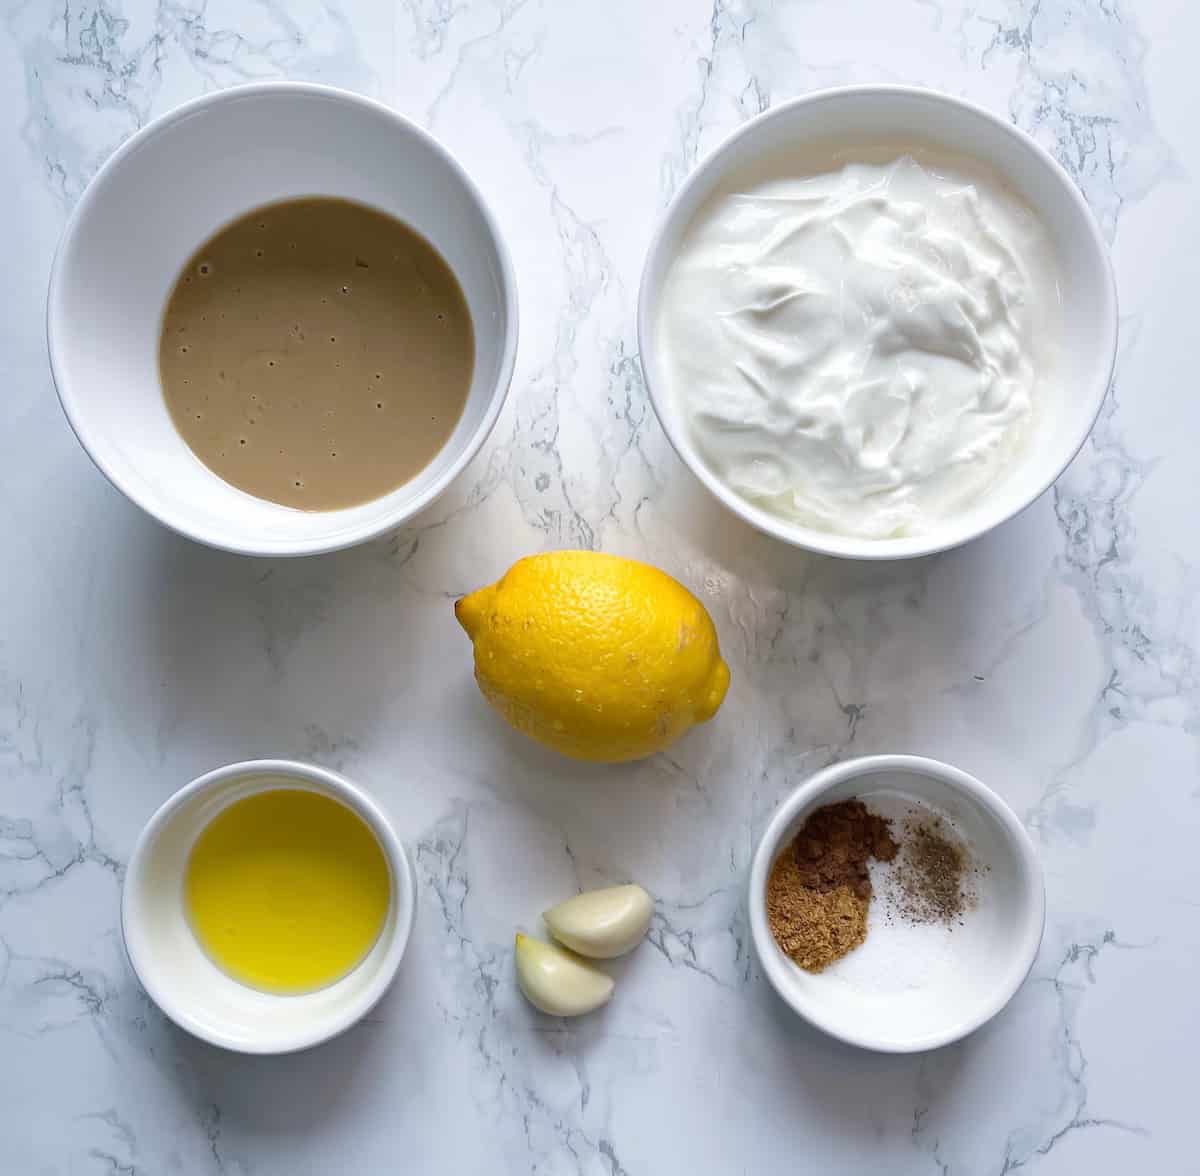 Tahini Yogurt Dip Ingredients with tahini (sesame paste), plain yogurt, extra virgin olive oil, lemon, garlic clove, and ground cumin with salt and black pepper in small bowls